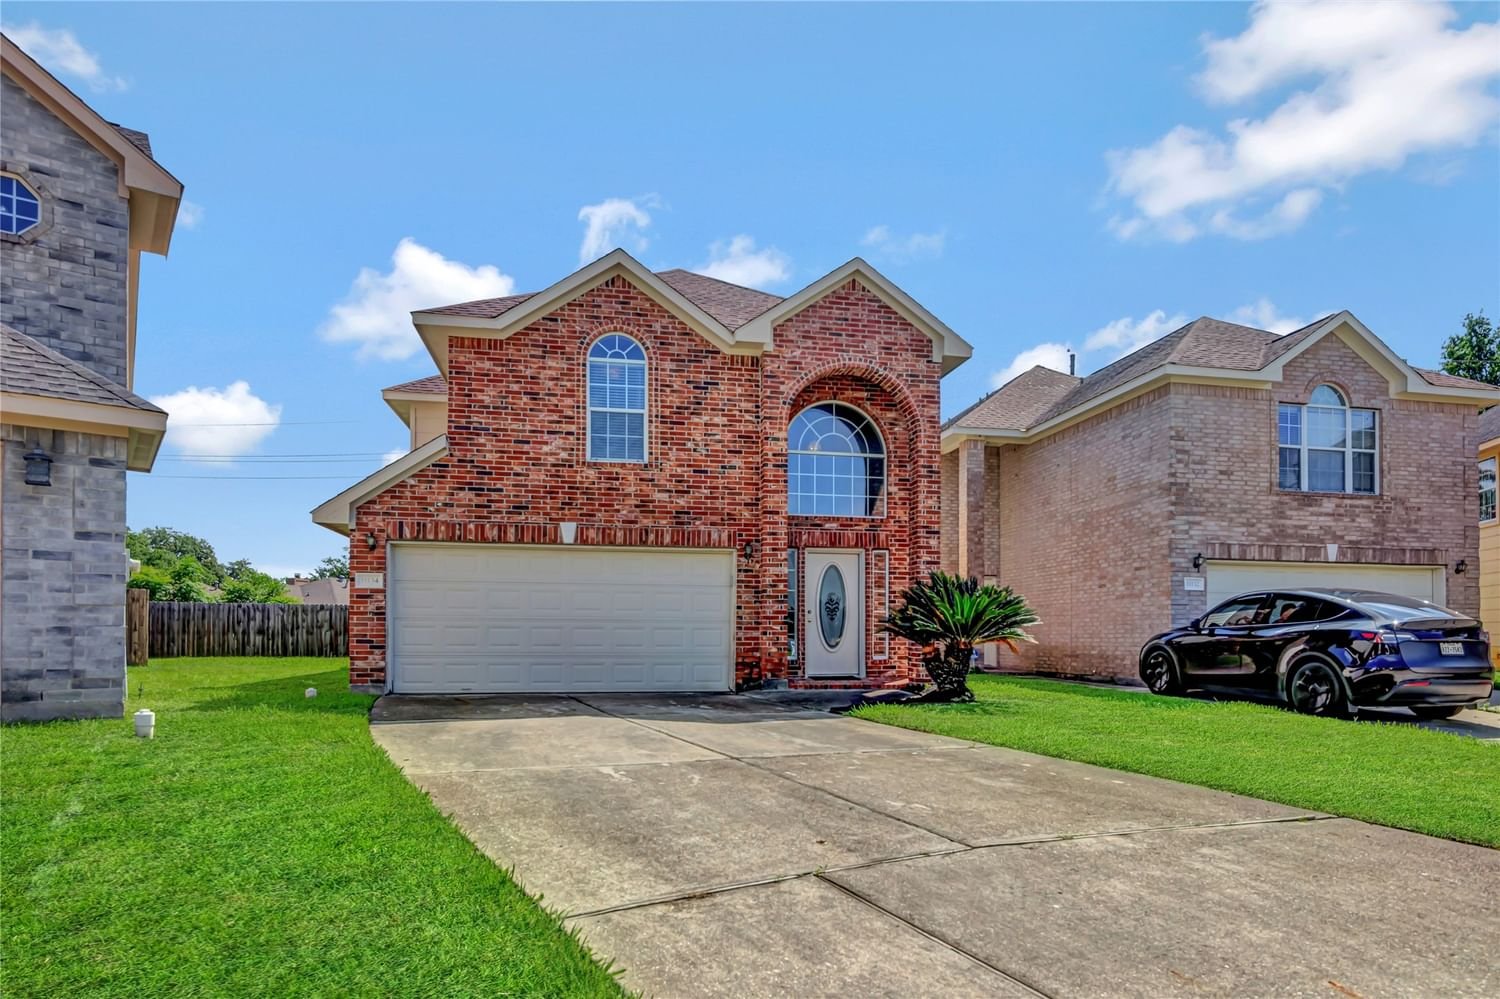 Real estate property located at 11134 Opatrny Meadows, Harris, Opatrny Meadows, Houston, TX, US